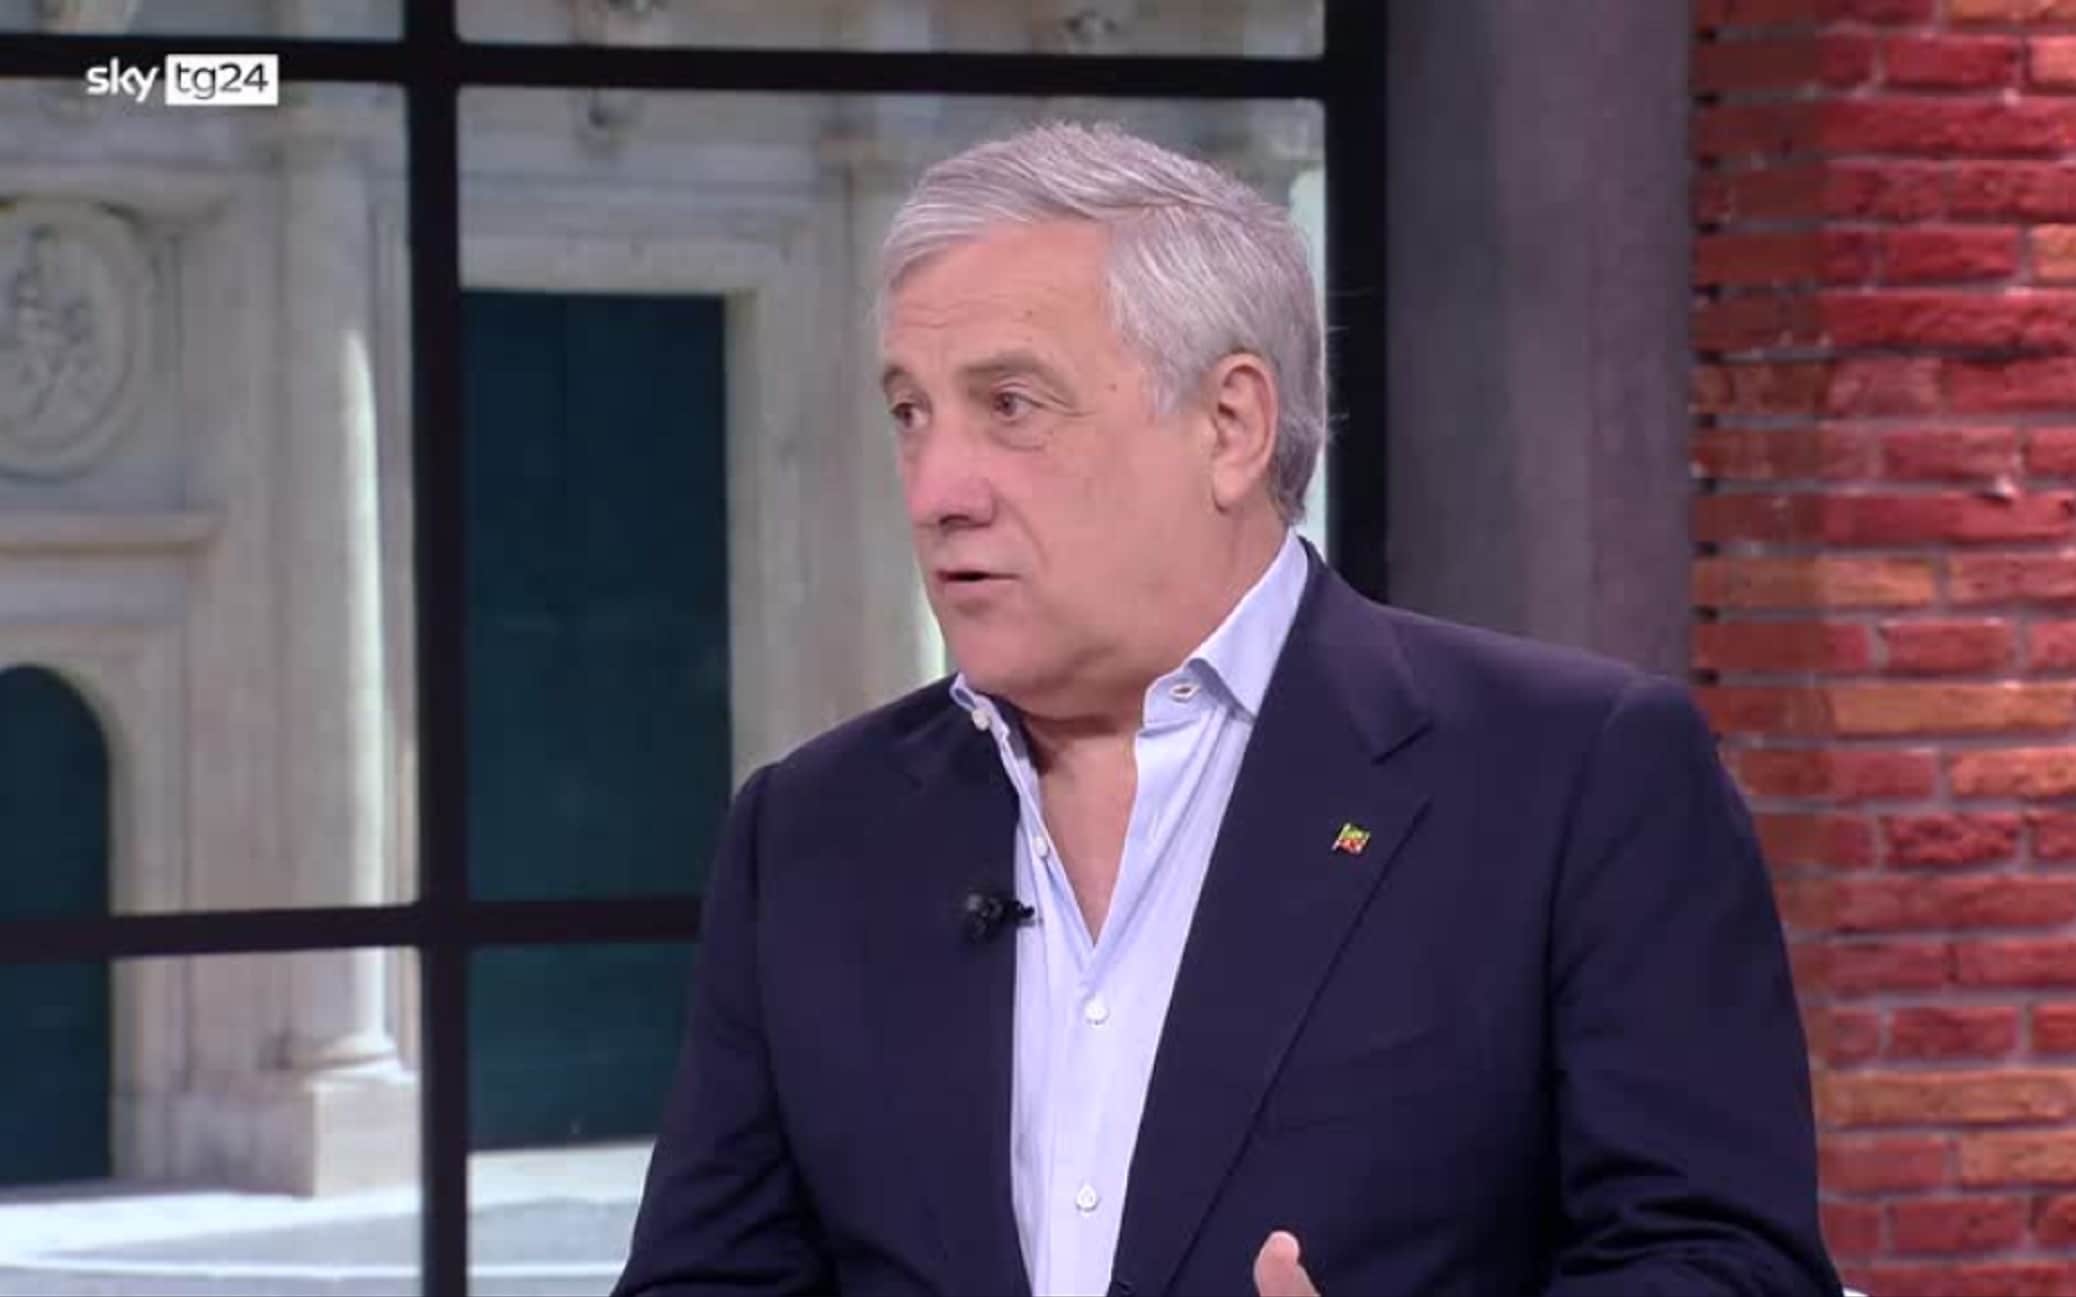 Antonio Tajani to “L’Ospite” on Sky TG24: “Draghi will remain prime minister until 2023”